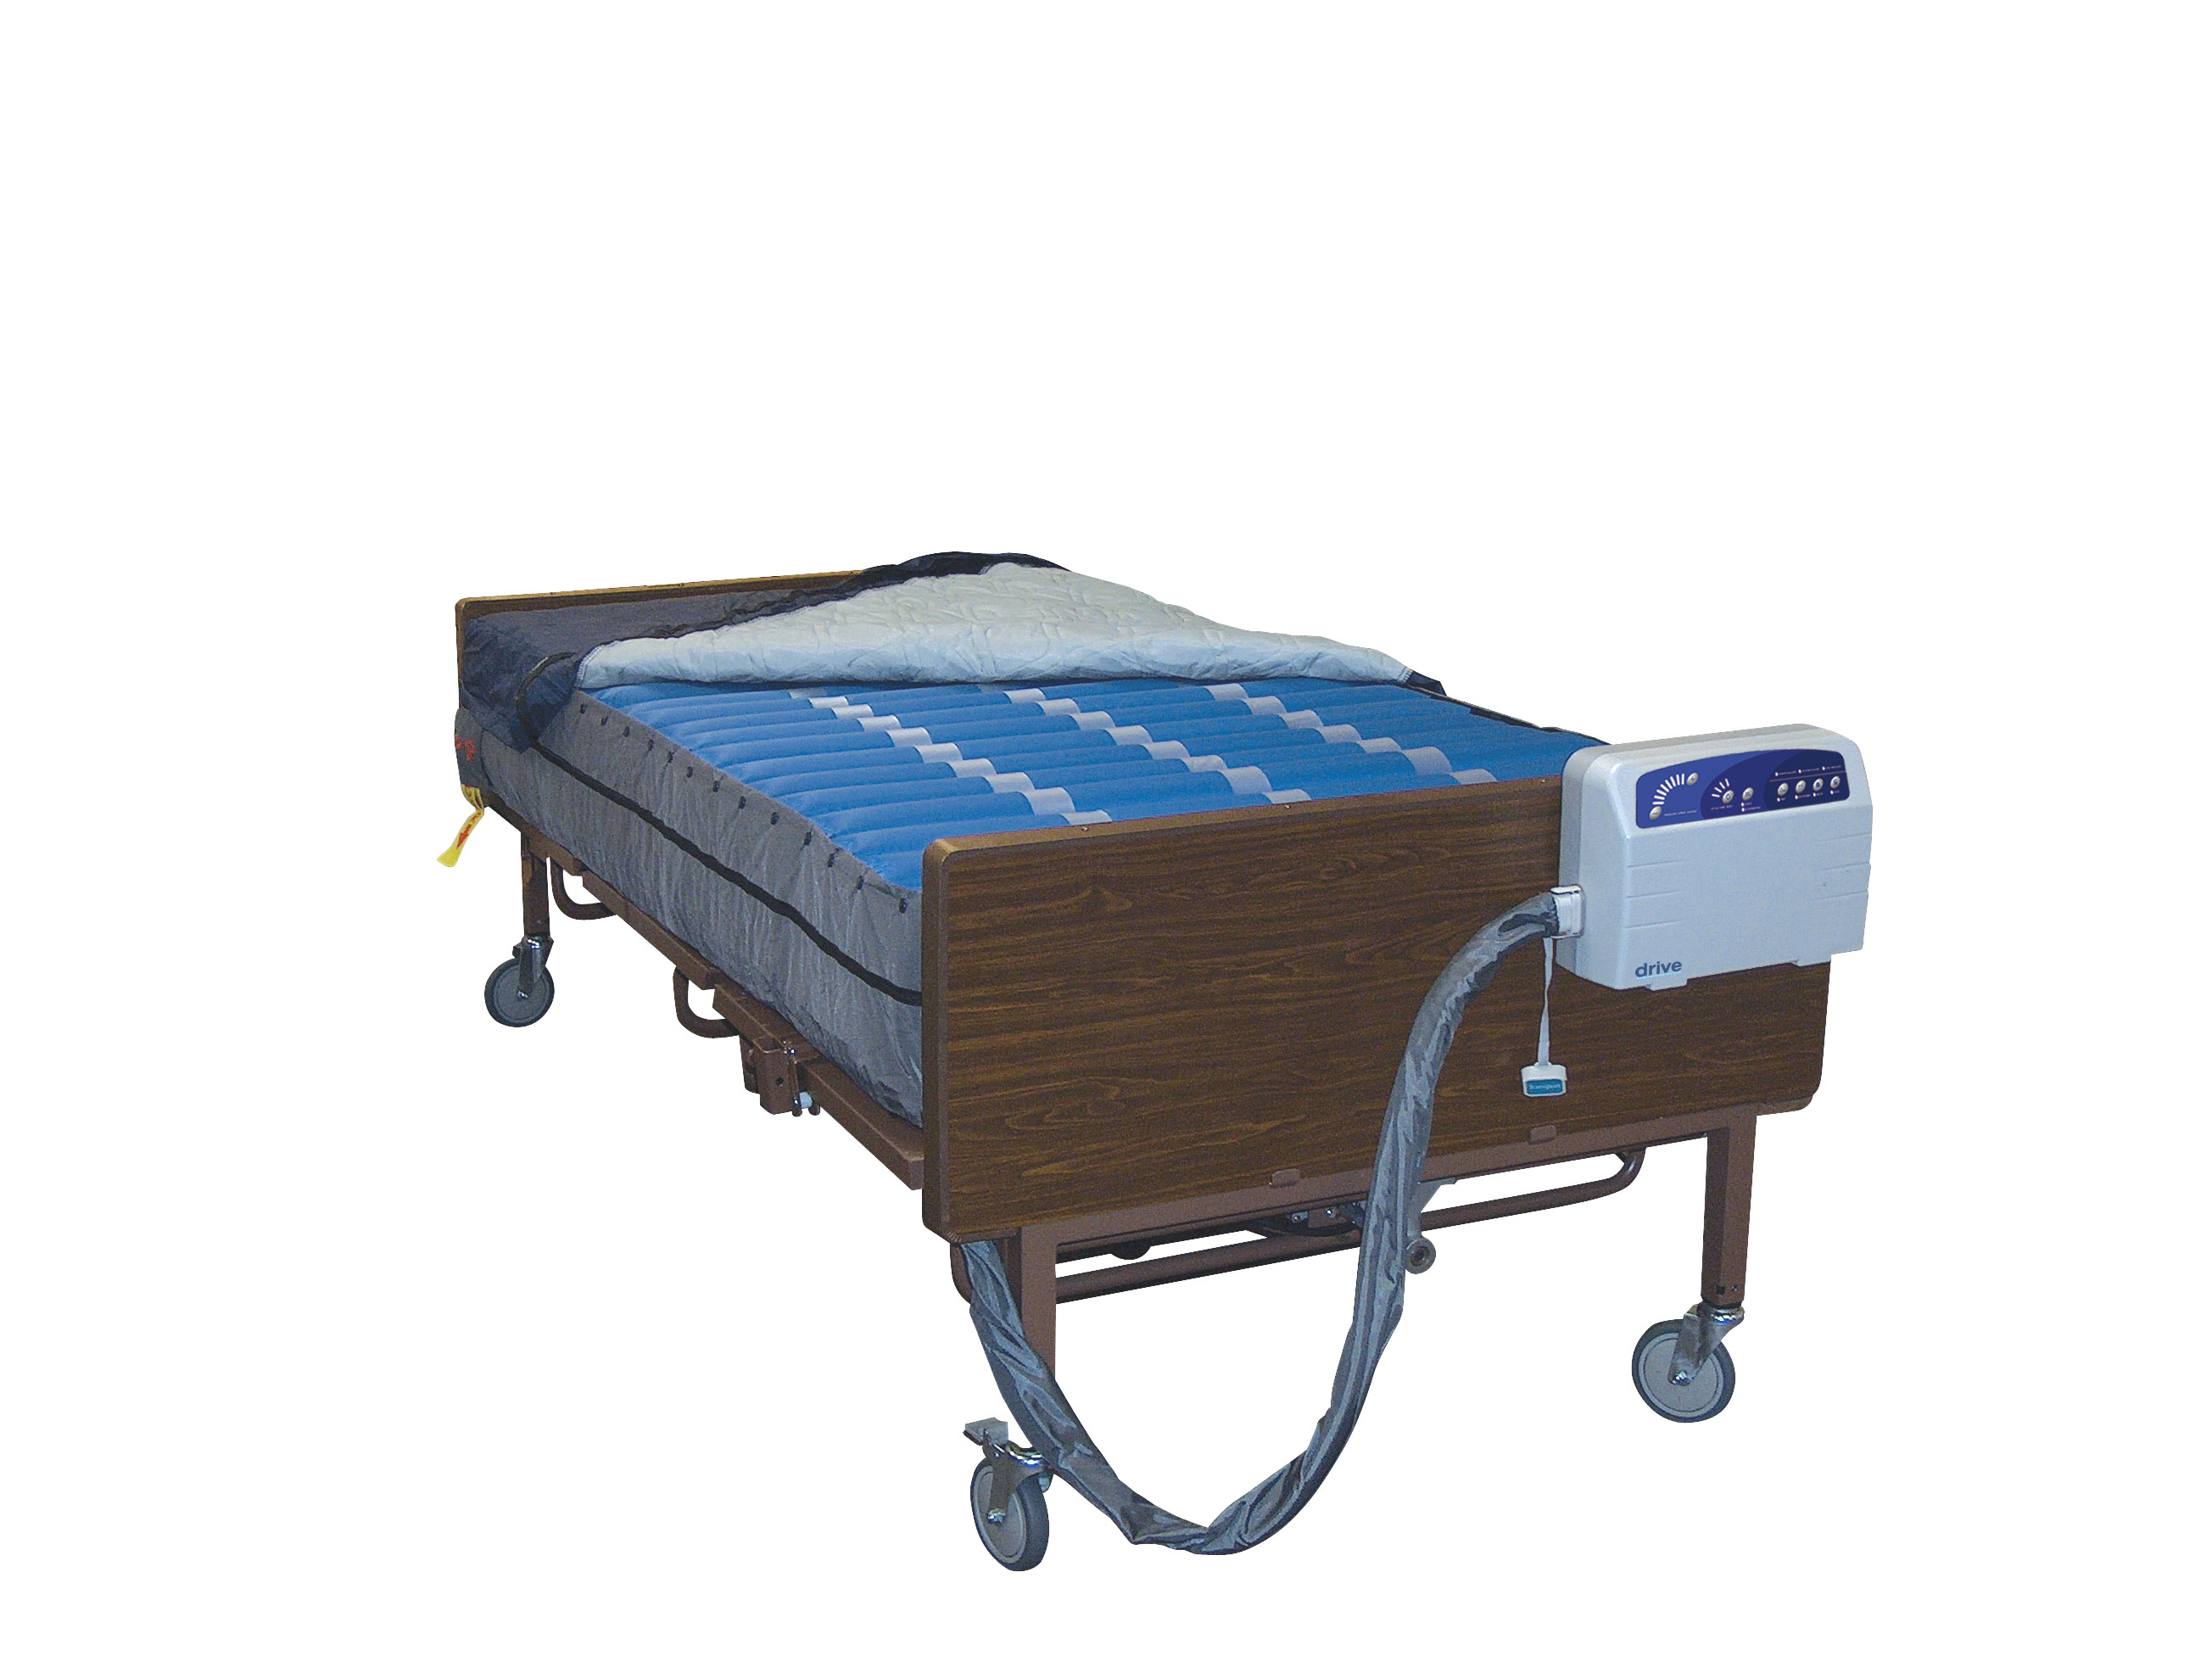 hcpcs code for low air loss mattress